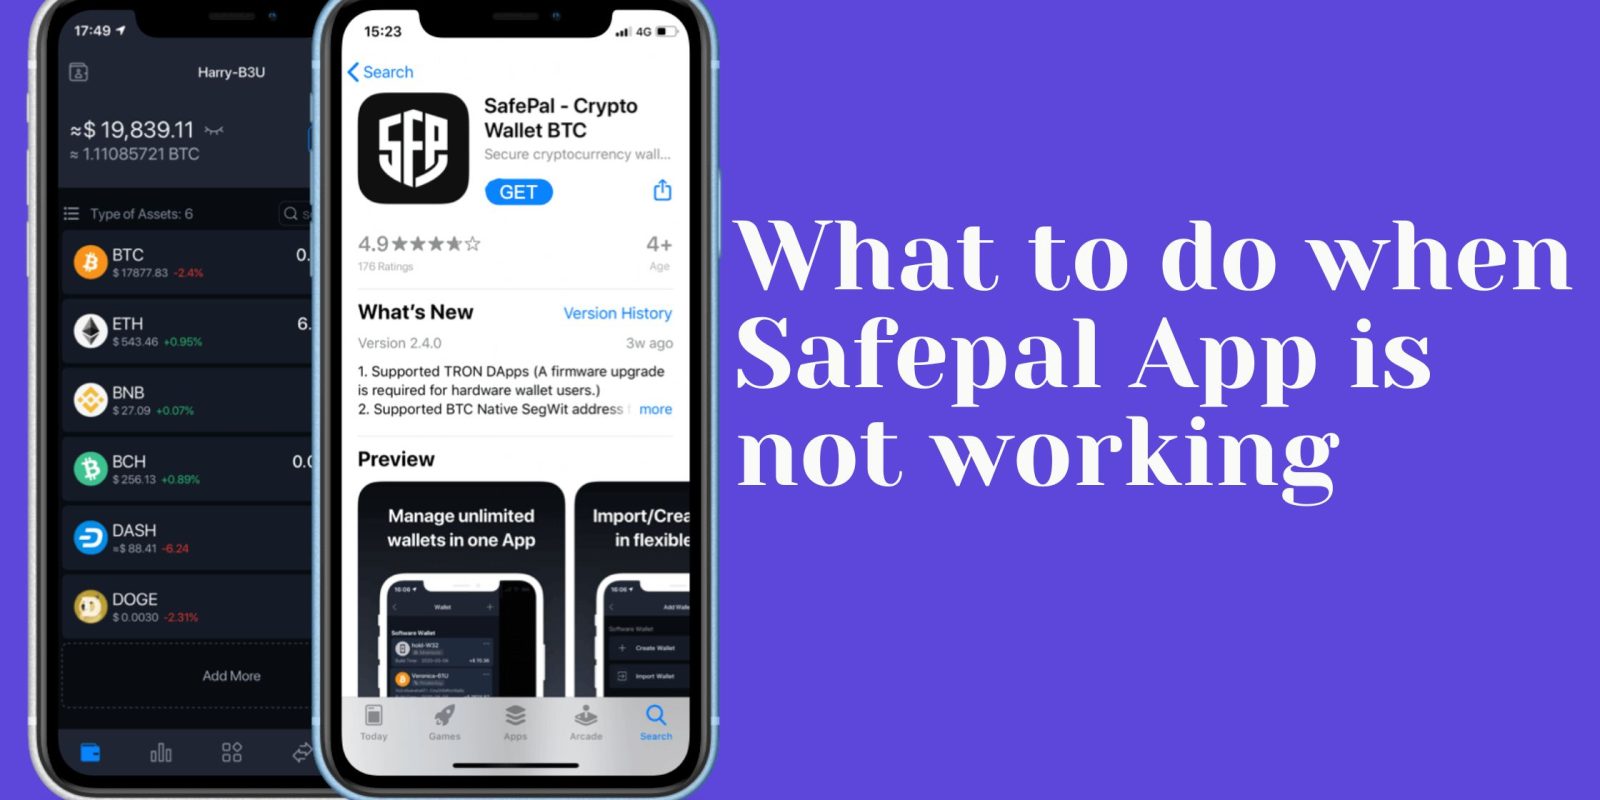 Safepal App is Not Working